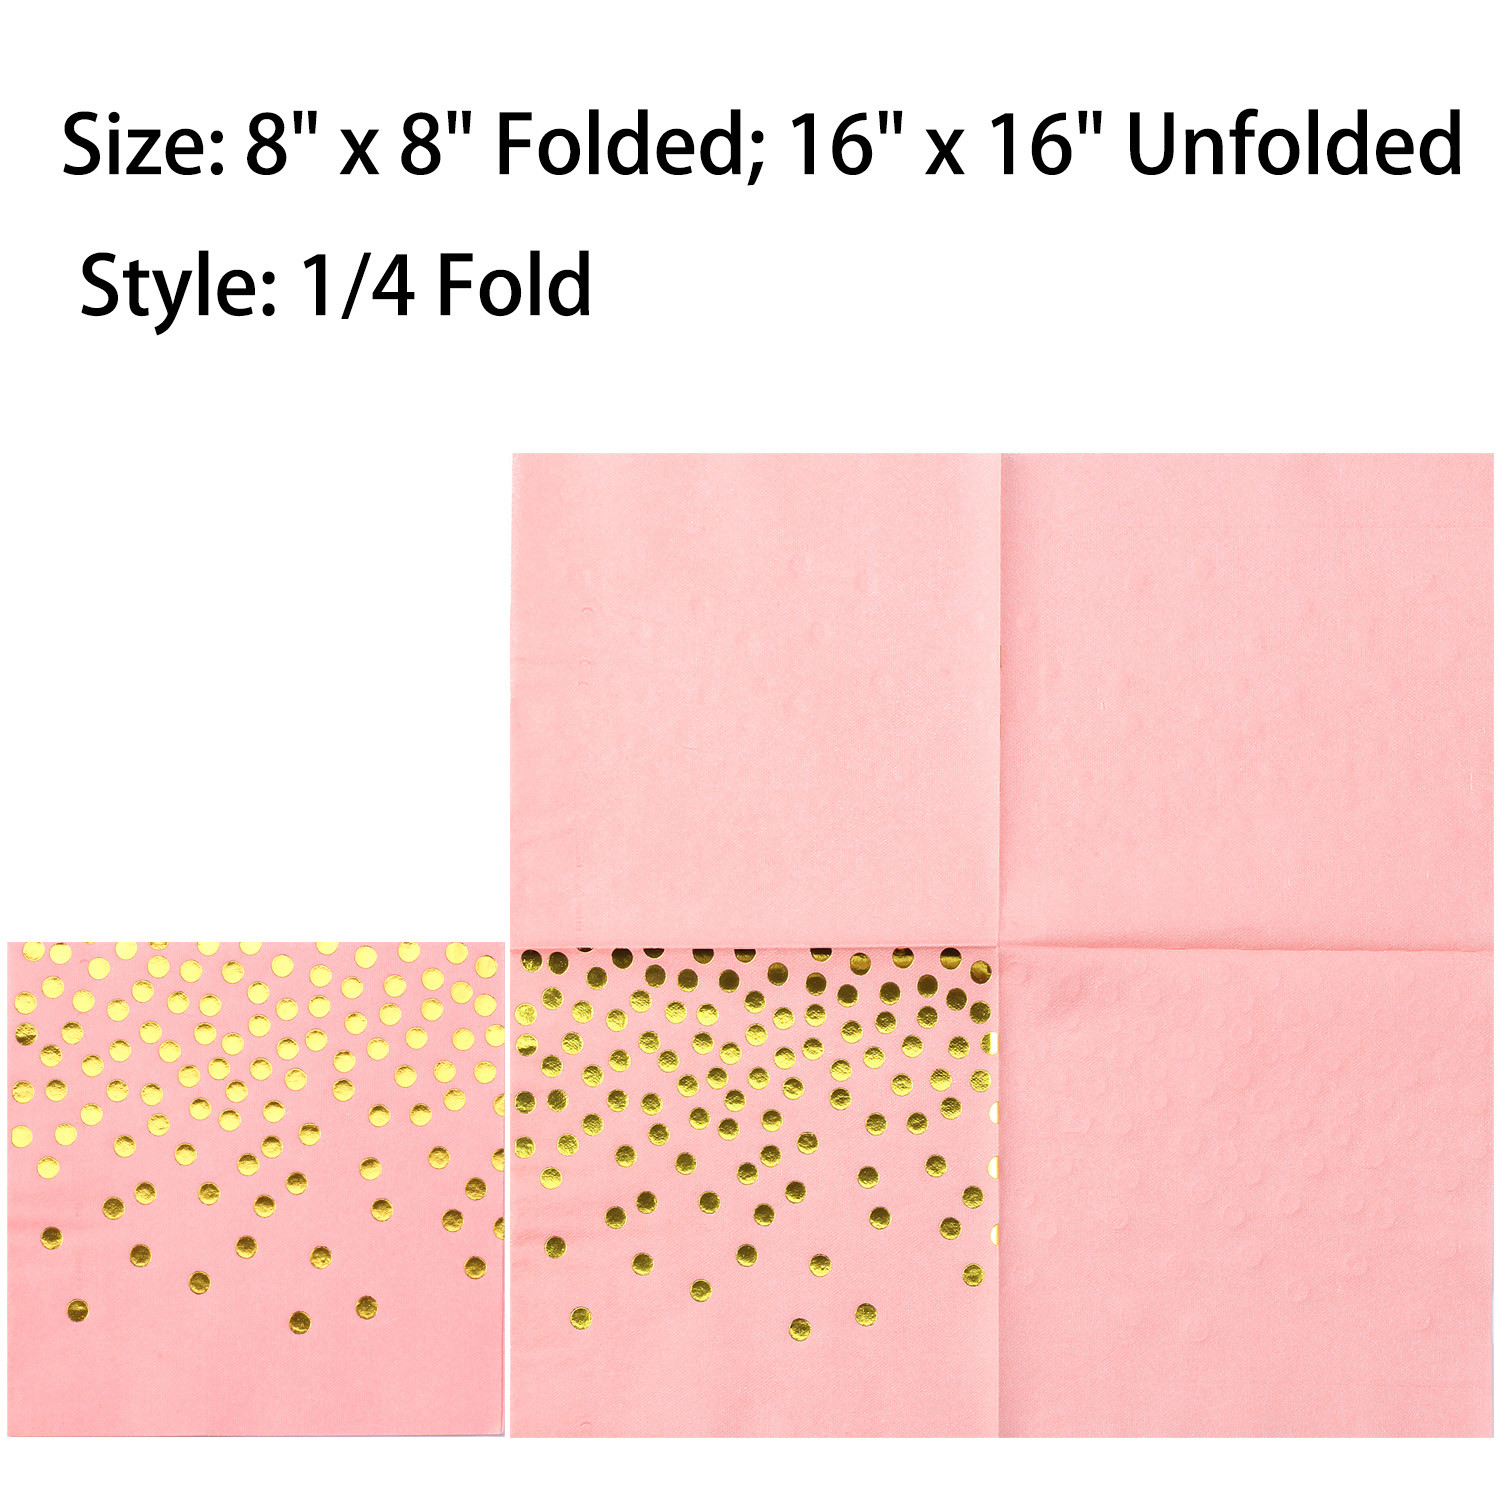 Lekoch Air-laid Disposables Paper White with Gold Dots Napkins 50PCS